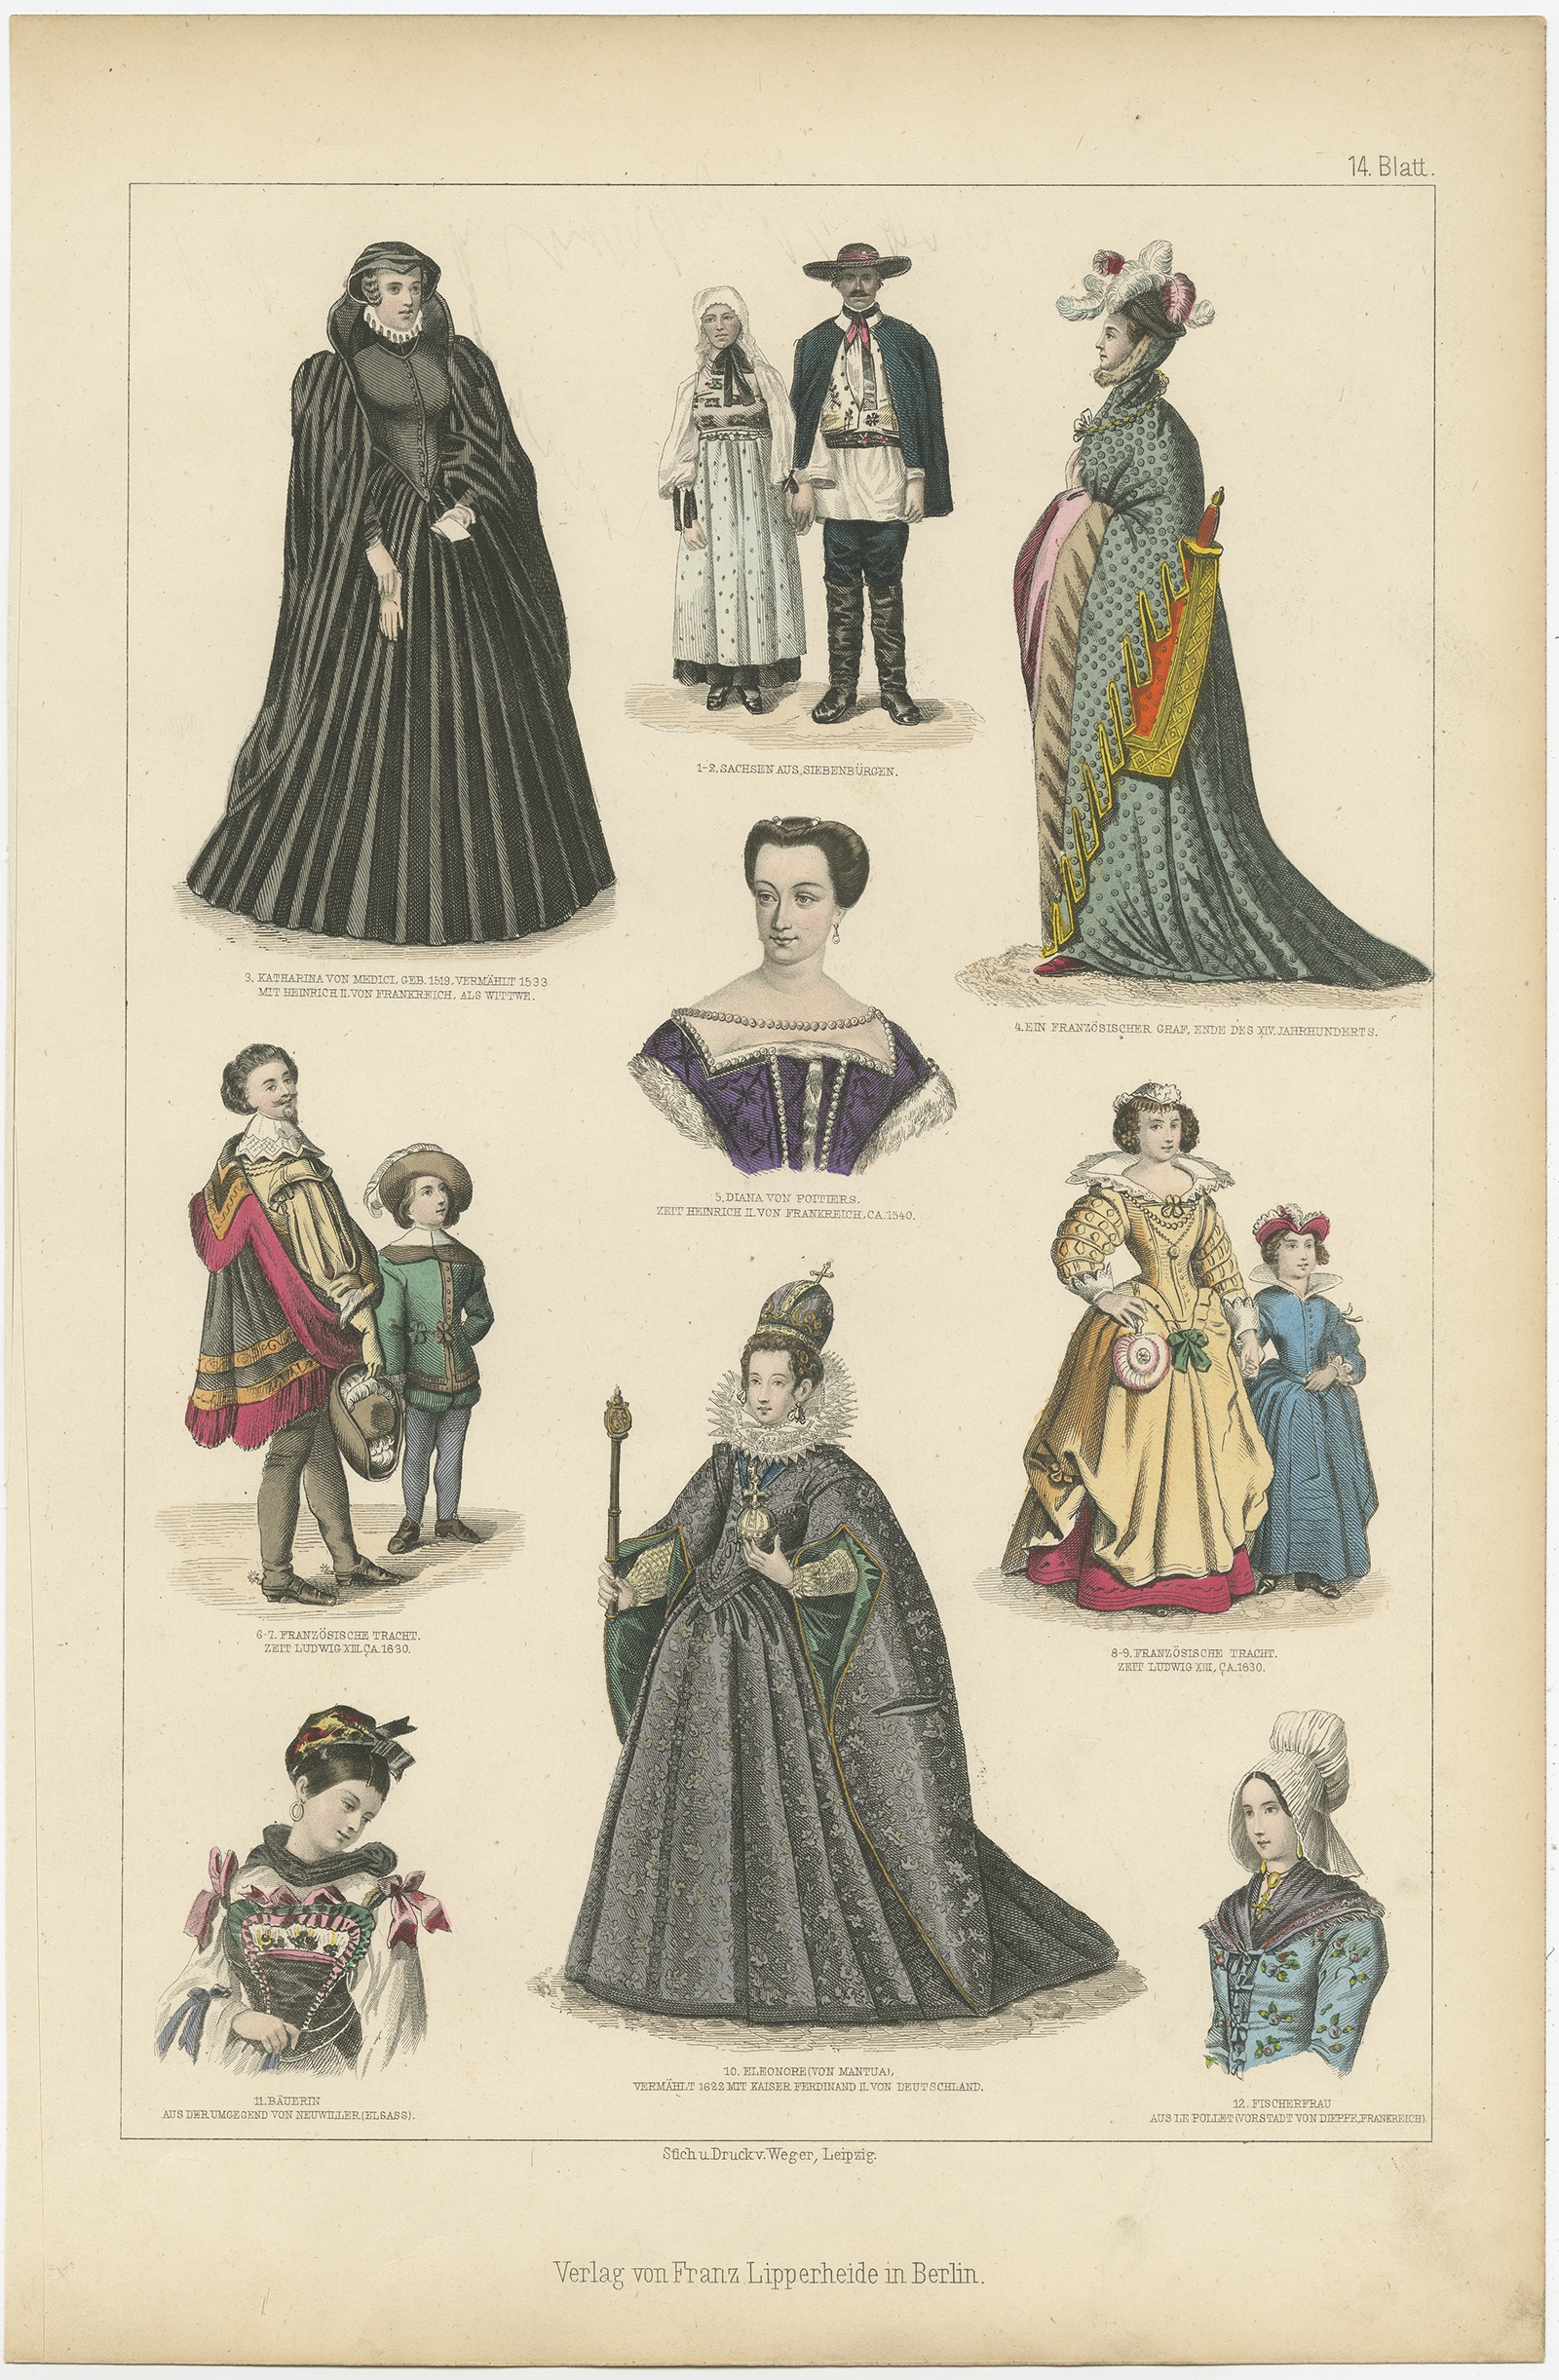 No. 14 Antique Costume Print by Lipperheide (c.1875)